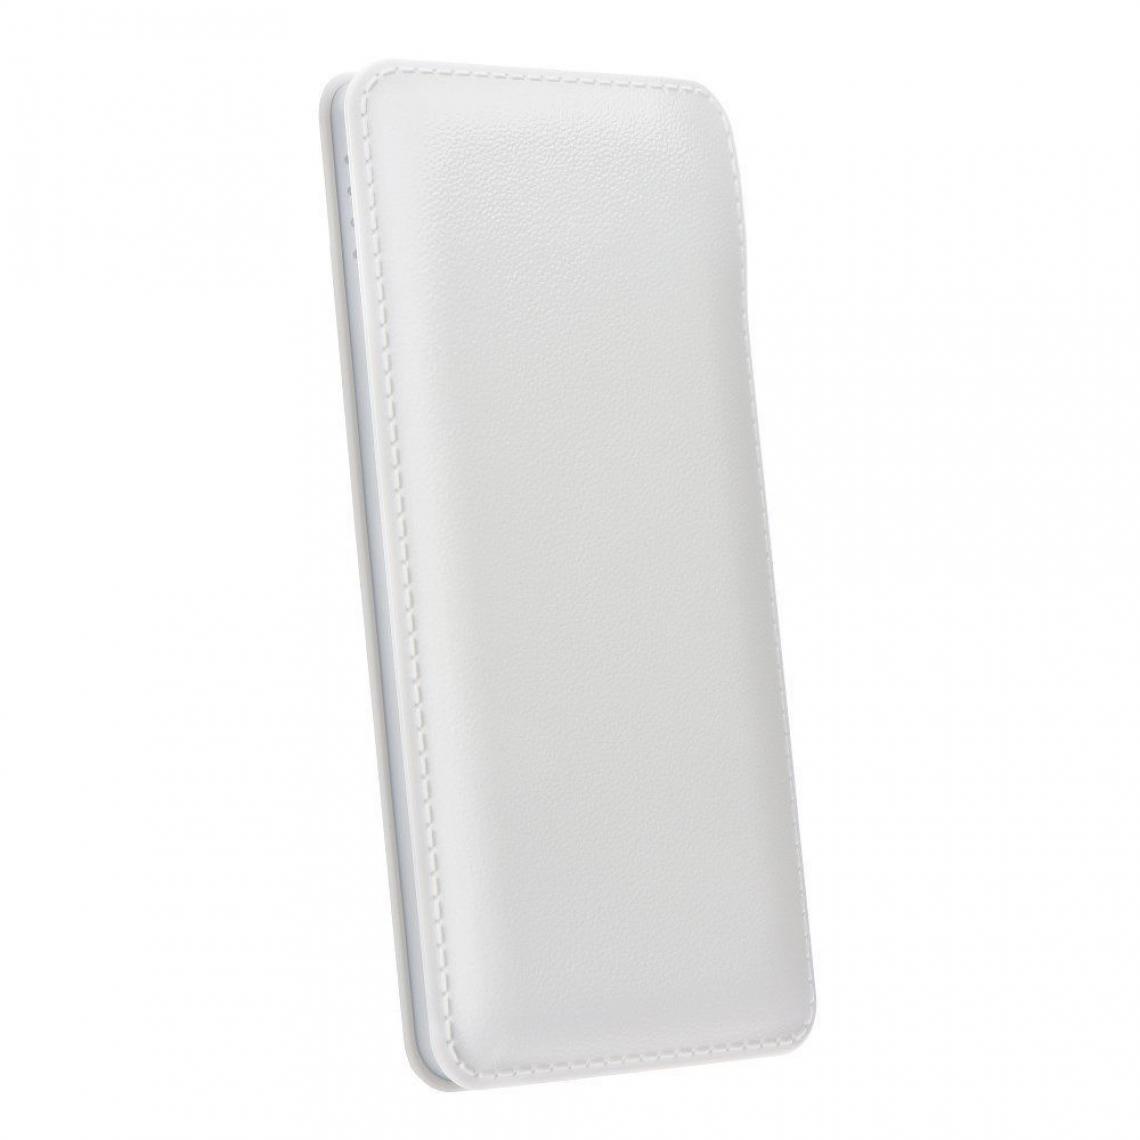 Ozzzo - Chargeur batterie externe 30000 mAh powerbank ozzzo blanc pour Samsung Galaxy Tab A 8.0" - Autres accessoires smartphone